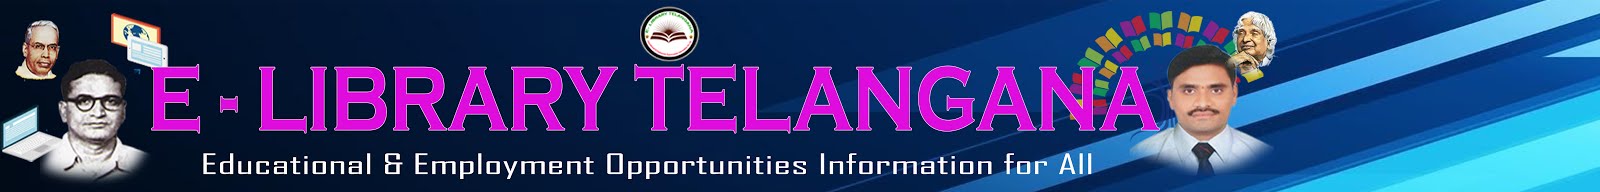 E-LIBRARY TELANGANA